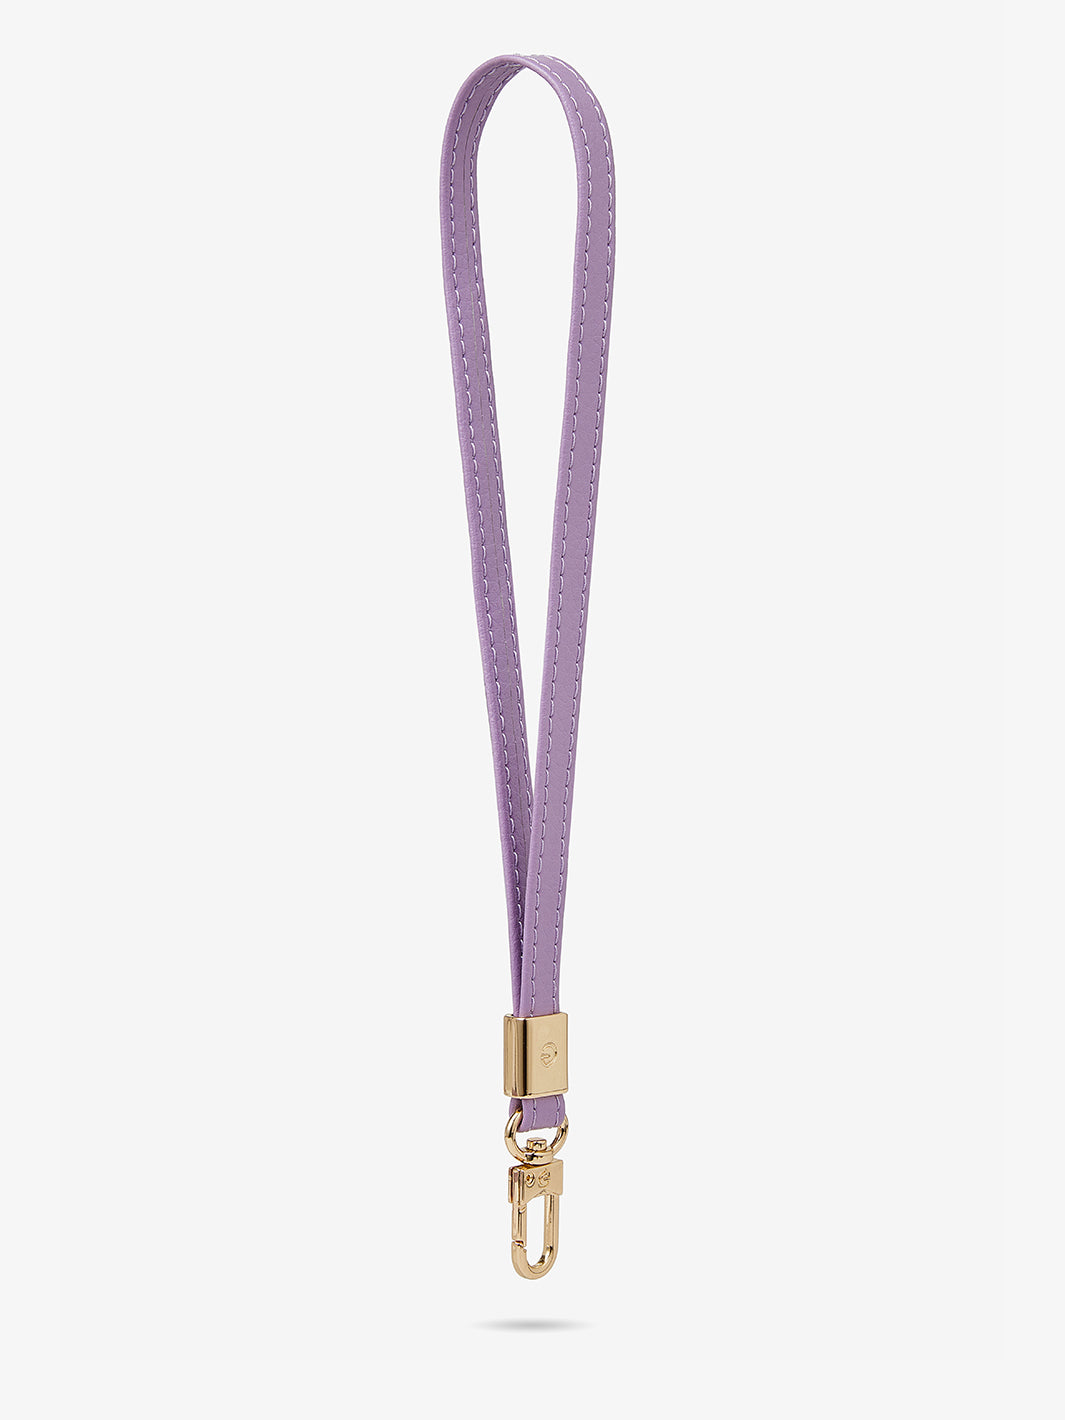 Classic Removable Phone Case Wrist Strap in Purple